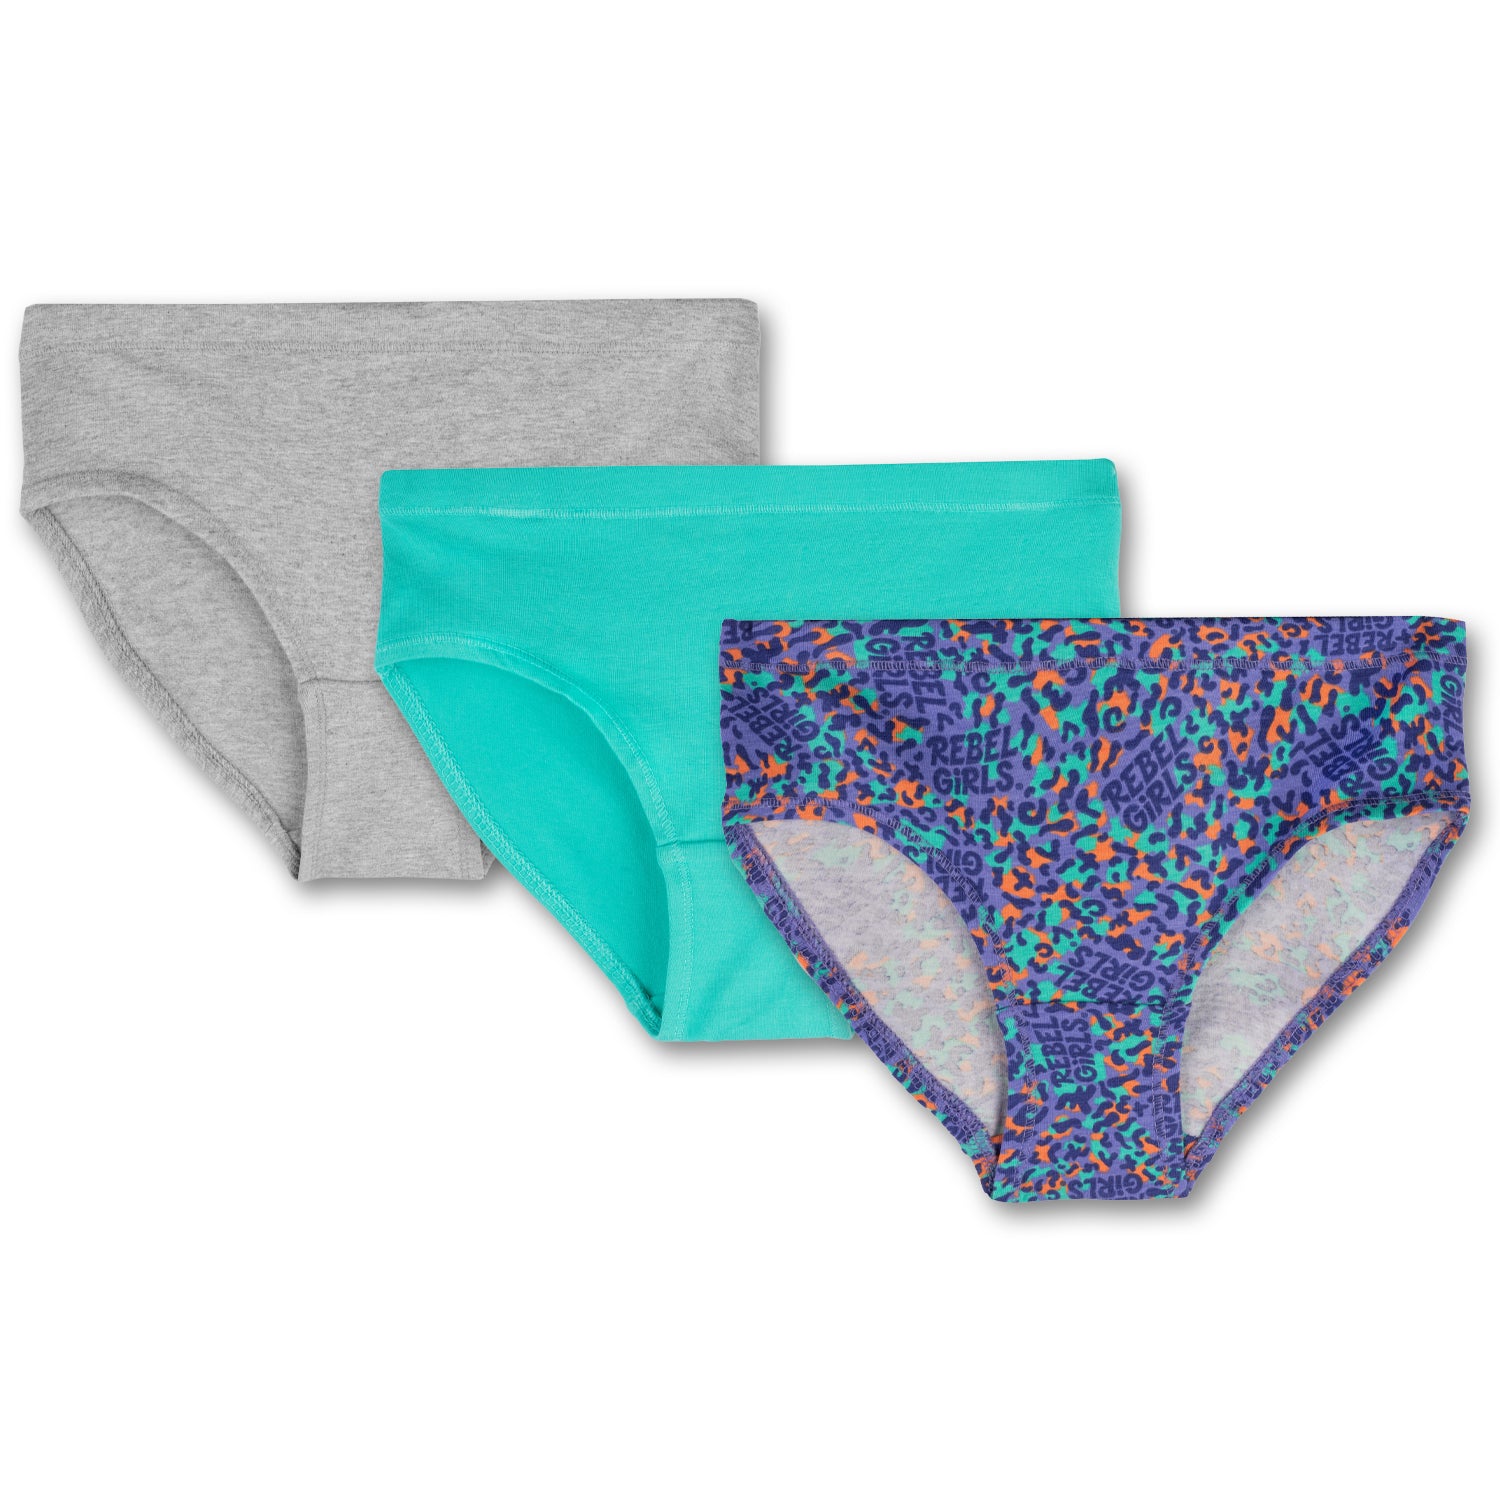 Organic Cotton Rebel Girls Bikini Underwear - 3 Pack - Mightly